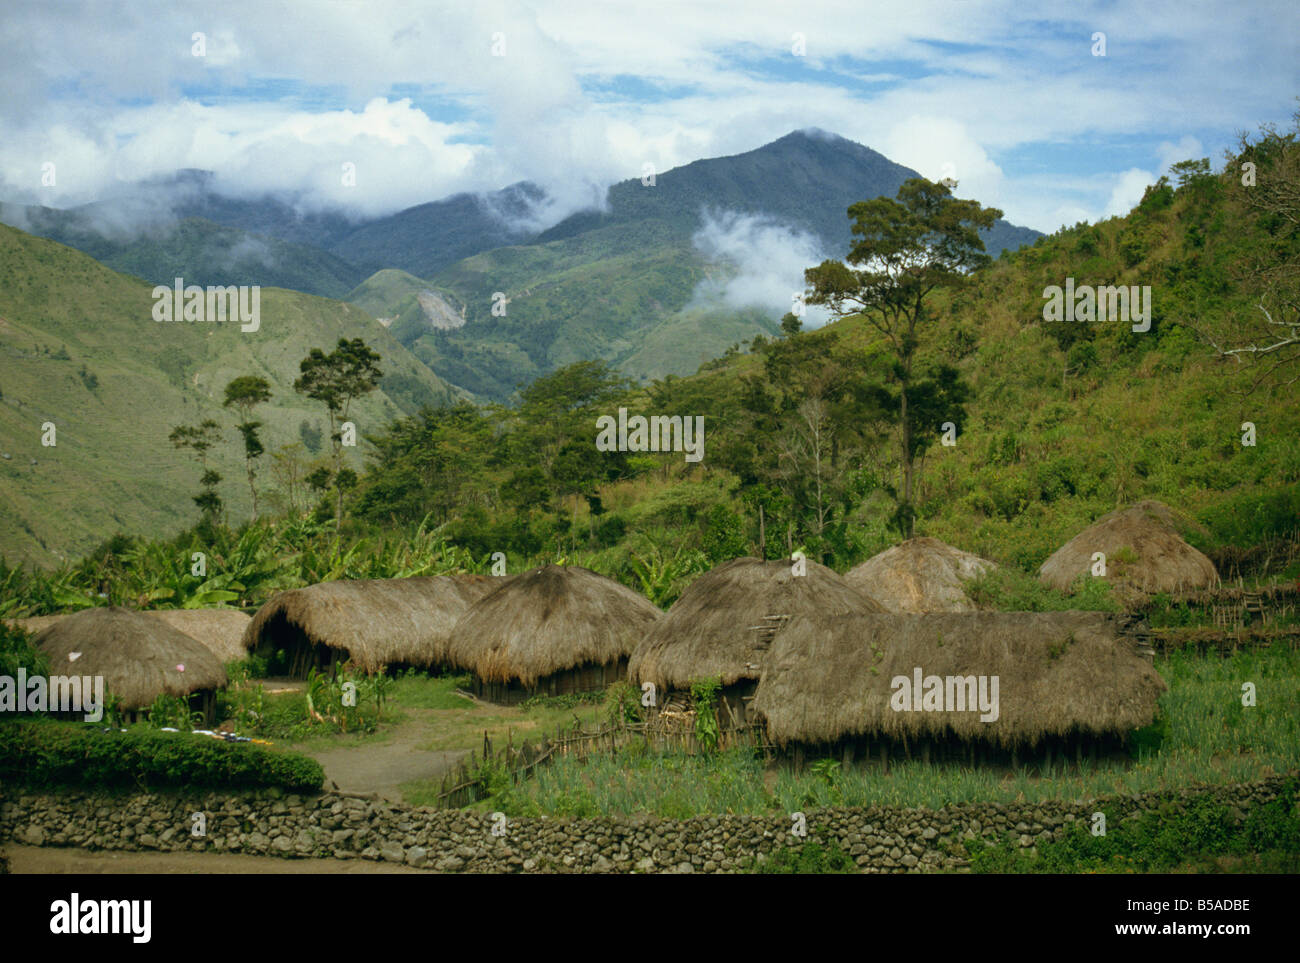 Yali Dorf Irian Jaya Indonesien Südost-Asien Asien Stockfoto